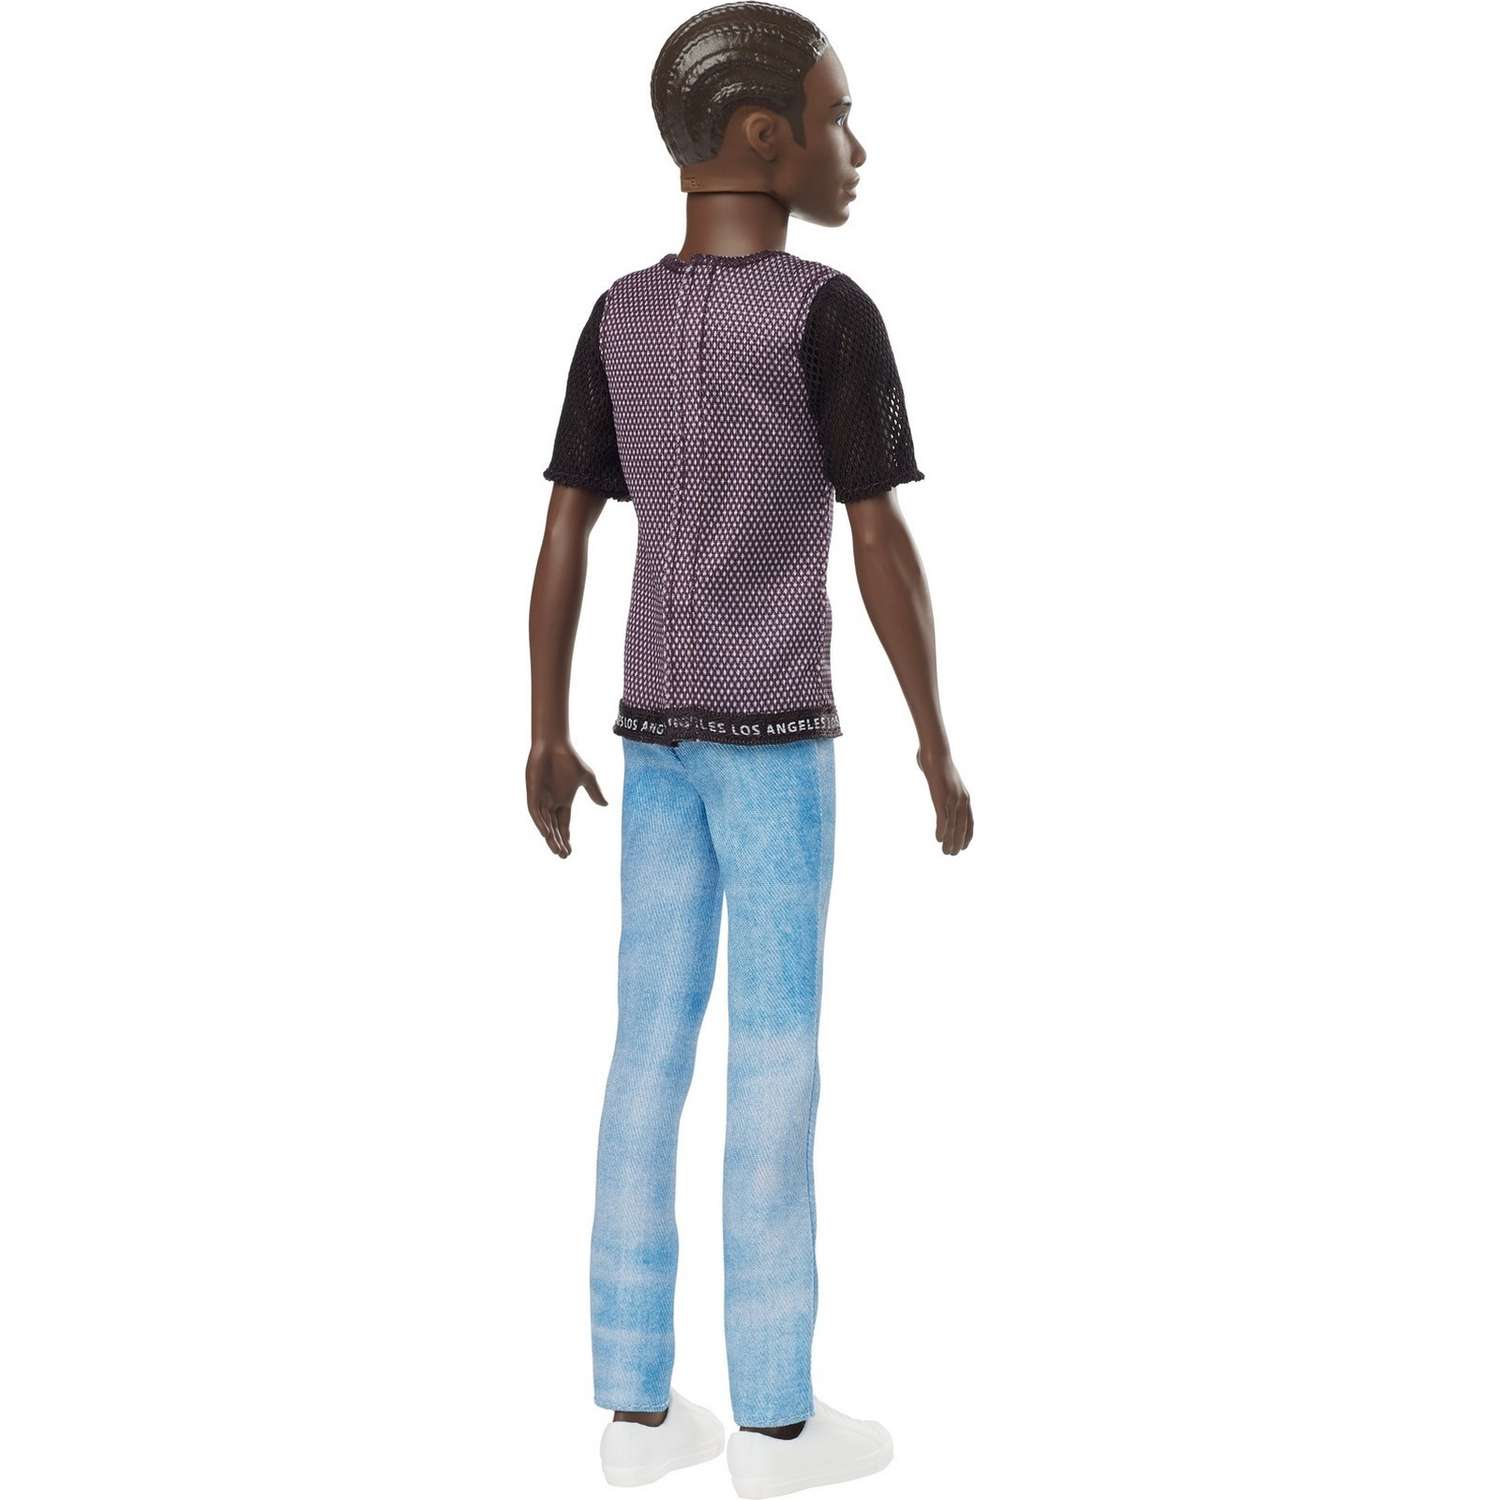 Кукла Barbie Игра с модой Кен в футболке и джинсах GDV13 DWK44 - фото 5